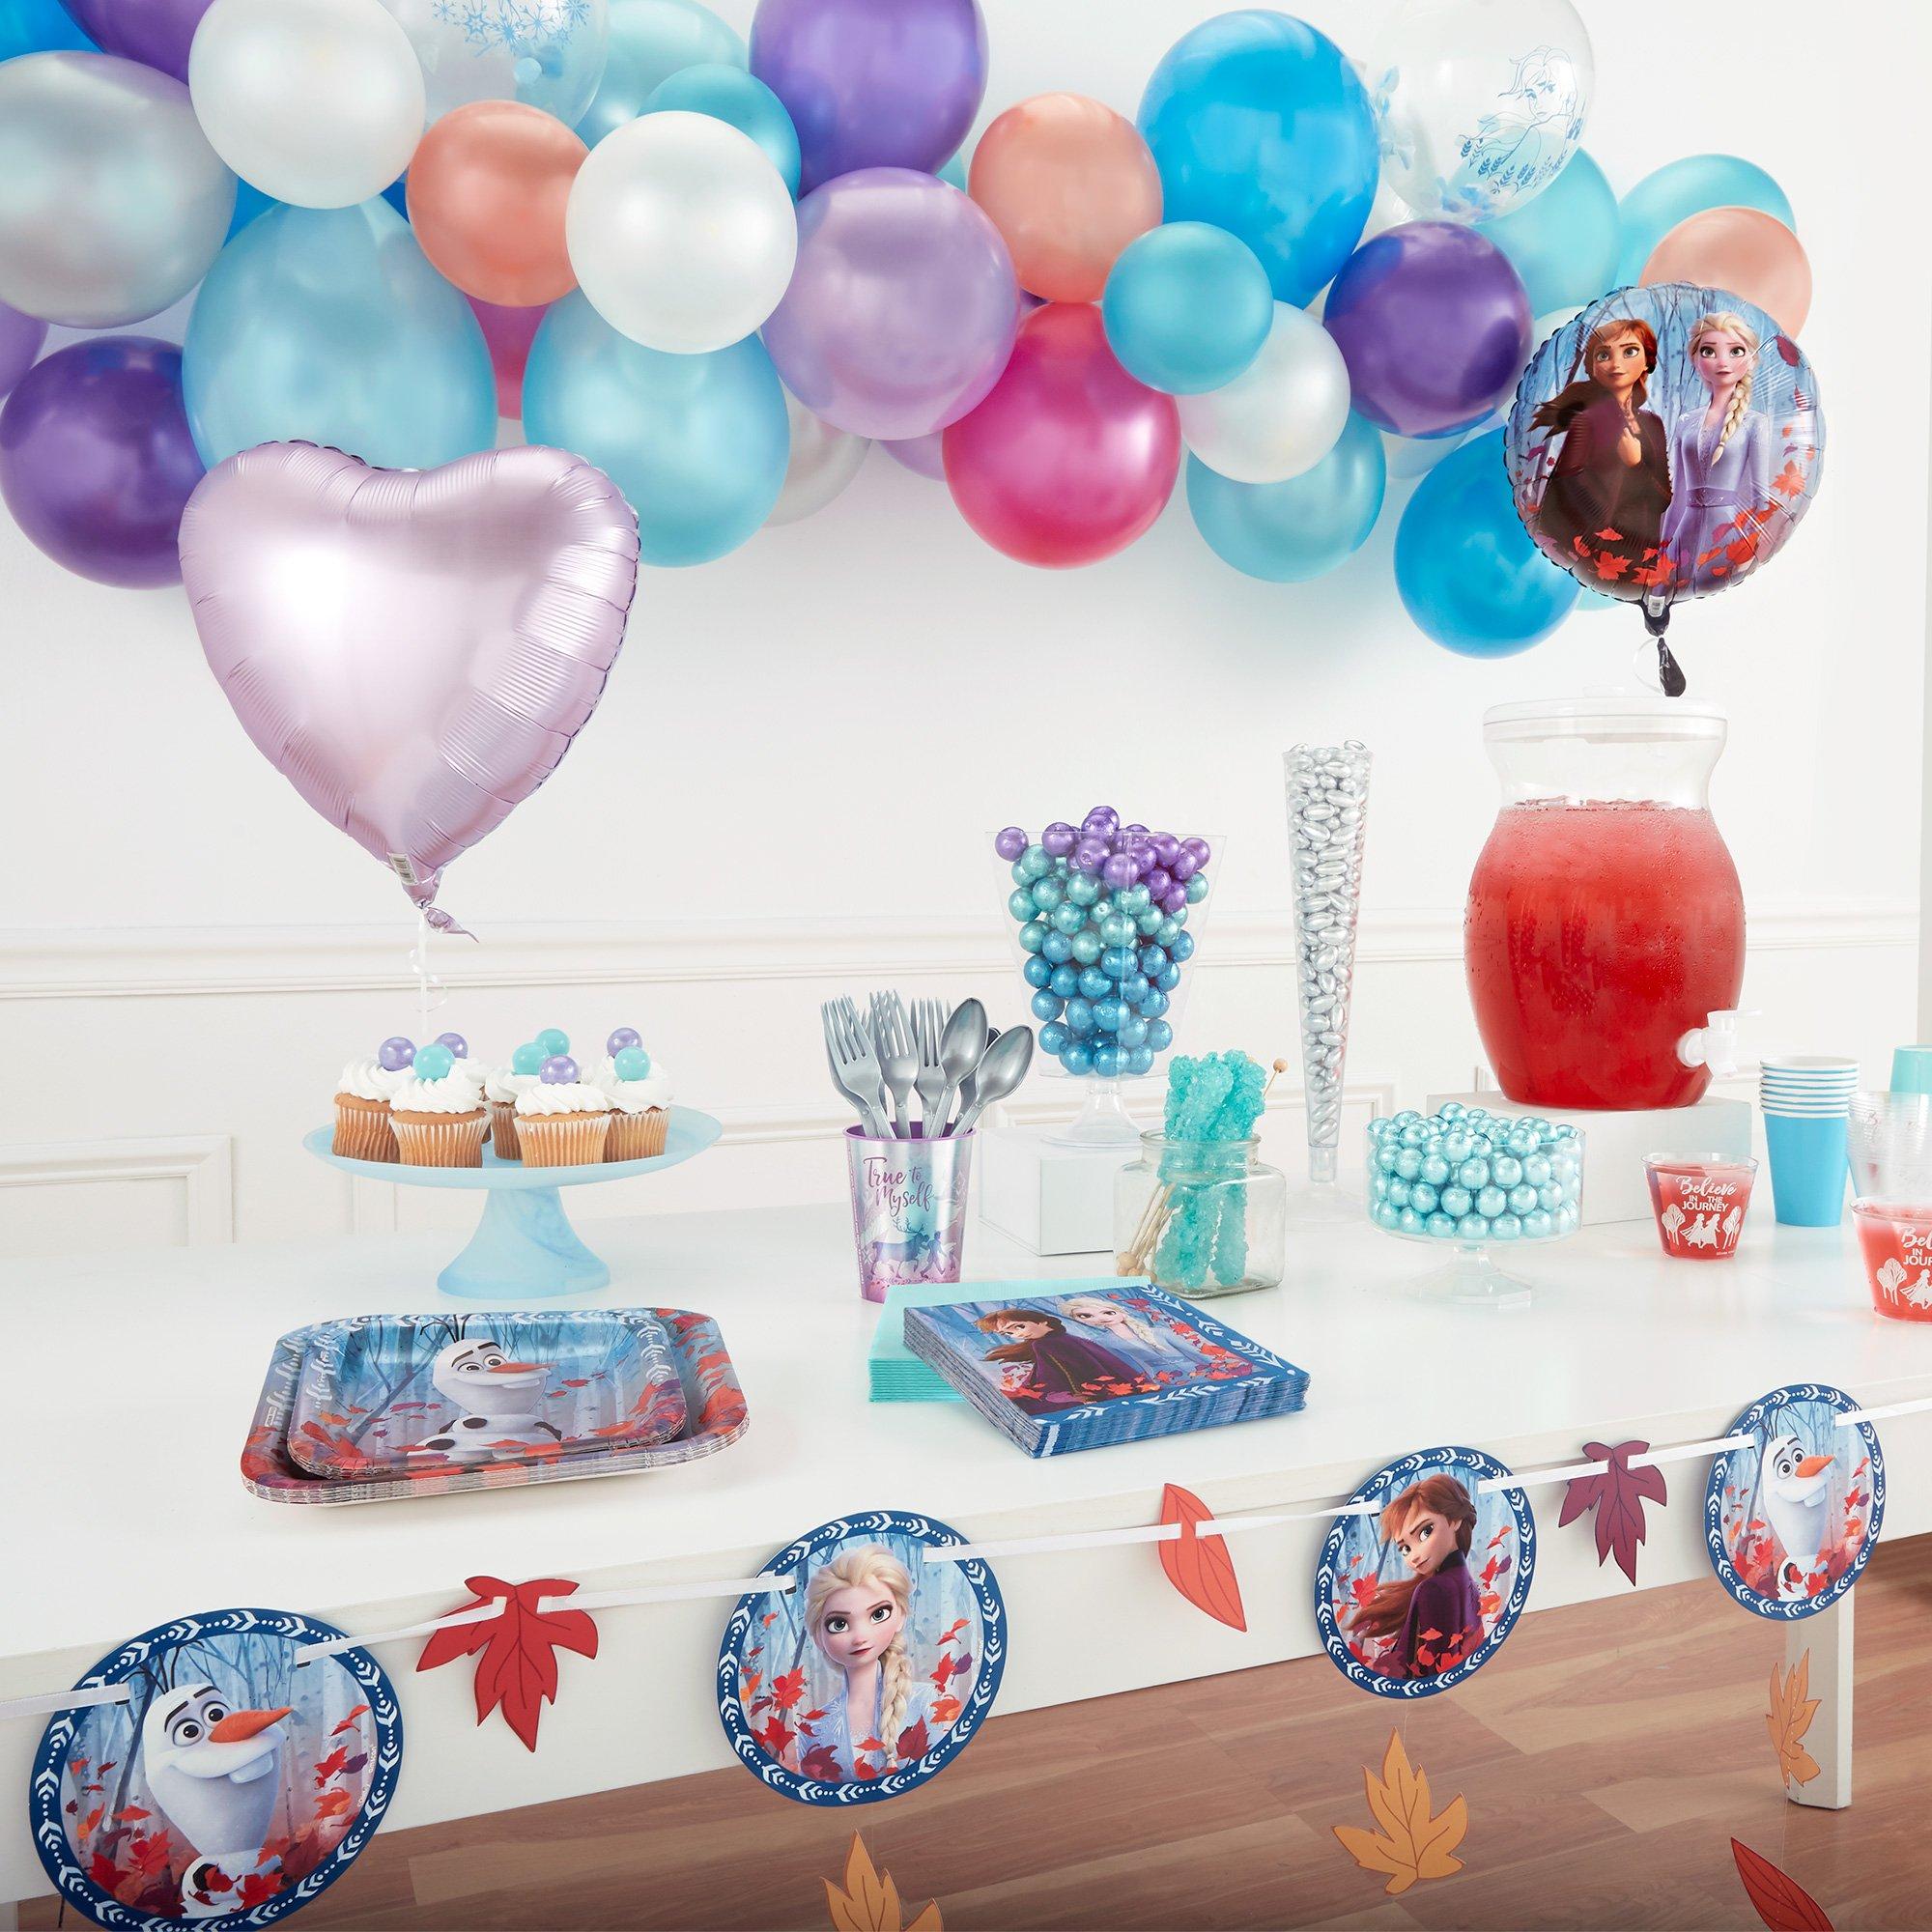 Frozen, Frozen Birthday Party, 24 Frozen Lollipop Labels, Frozen